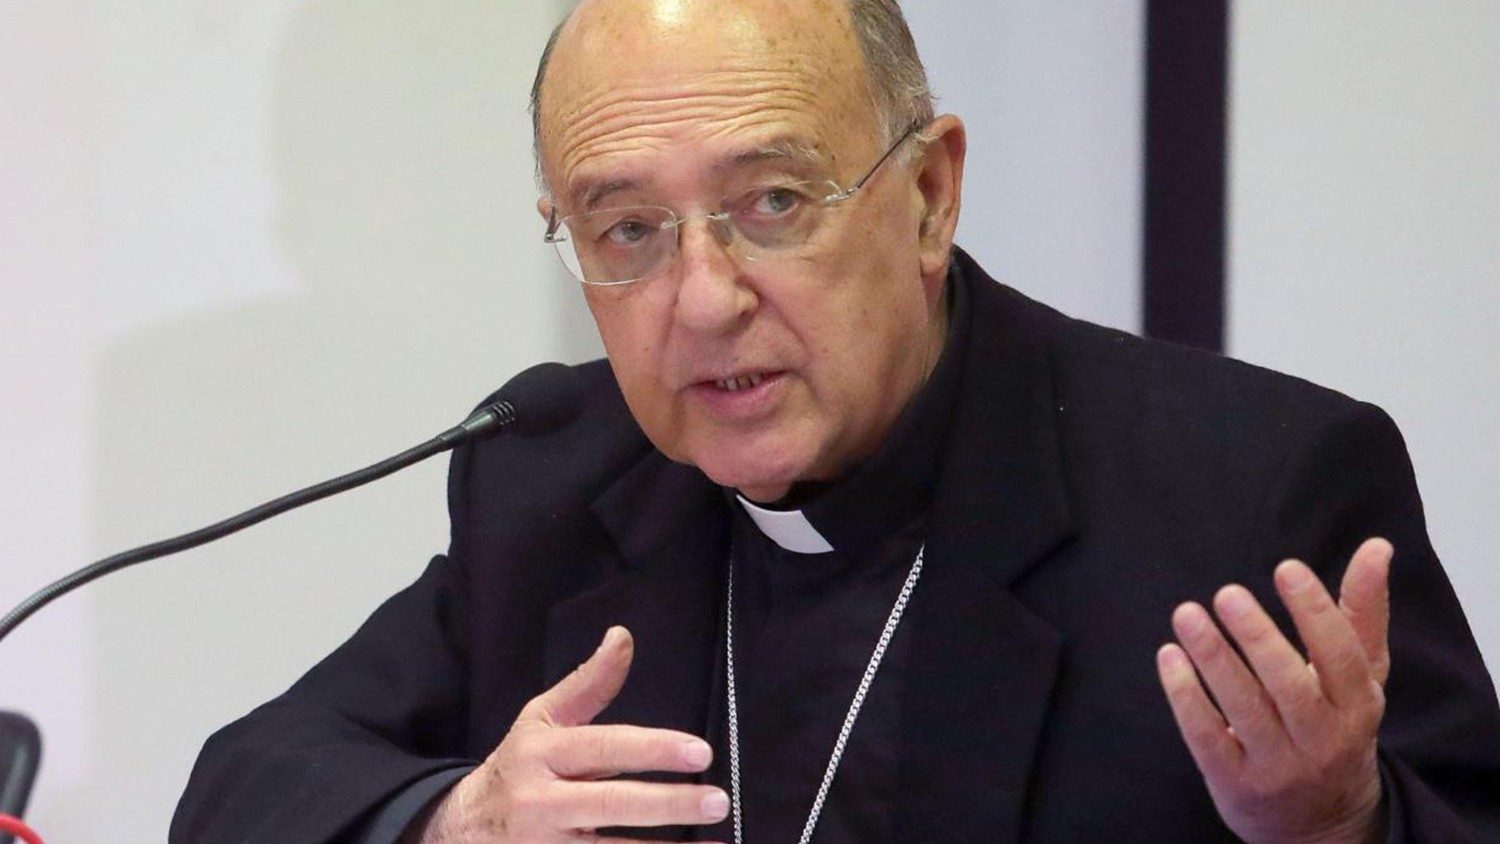 Cardenal Pedro Barreto nuevo presidente de la Red Eclesial Panamazónica